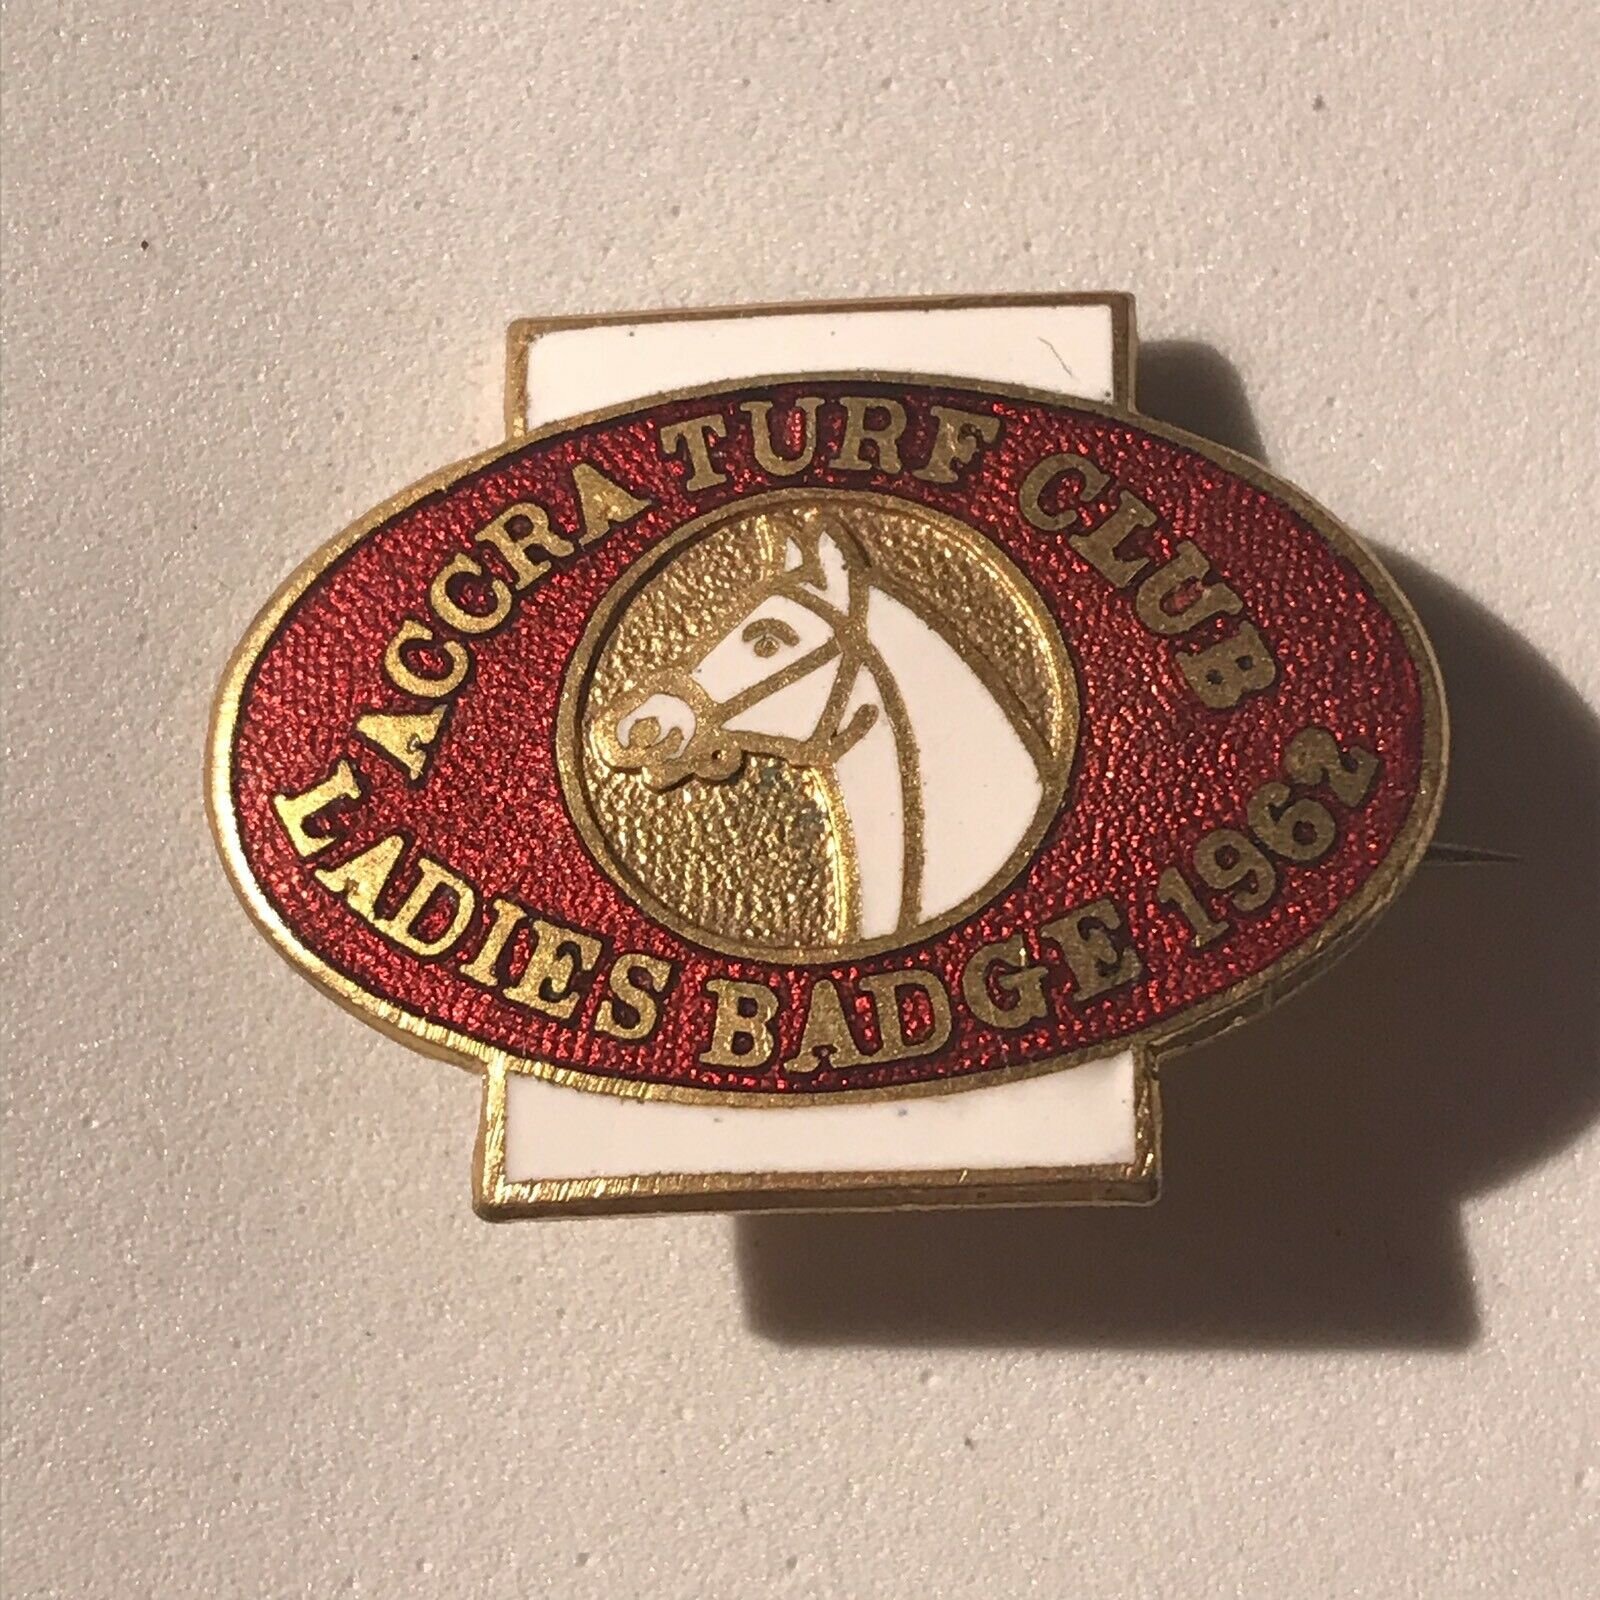 accra turf club badge 1962.jpg